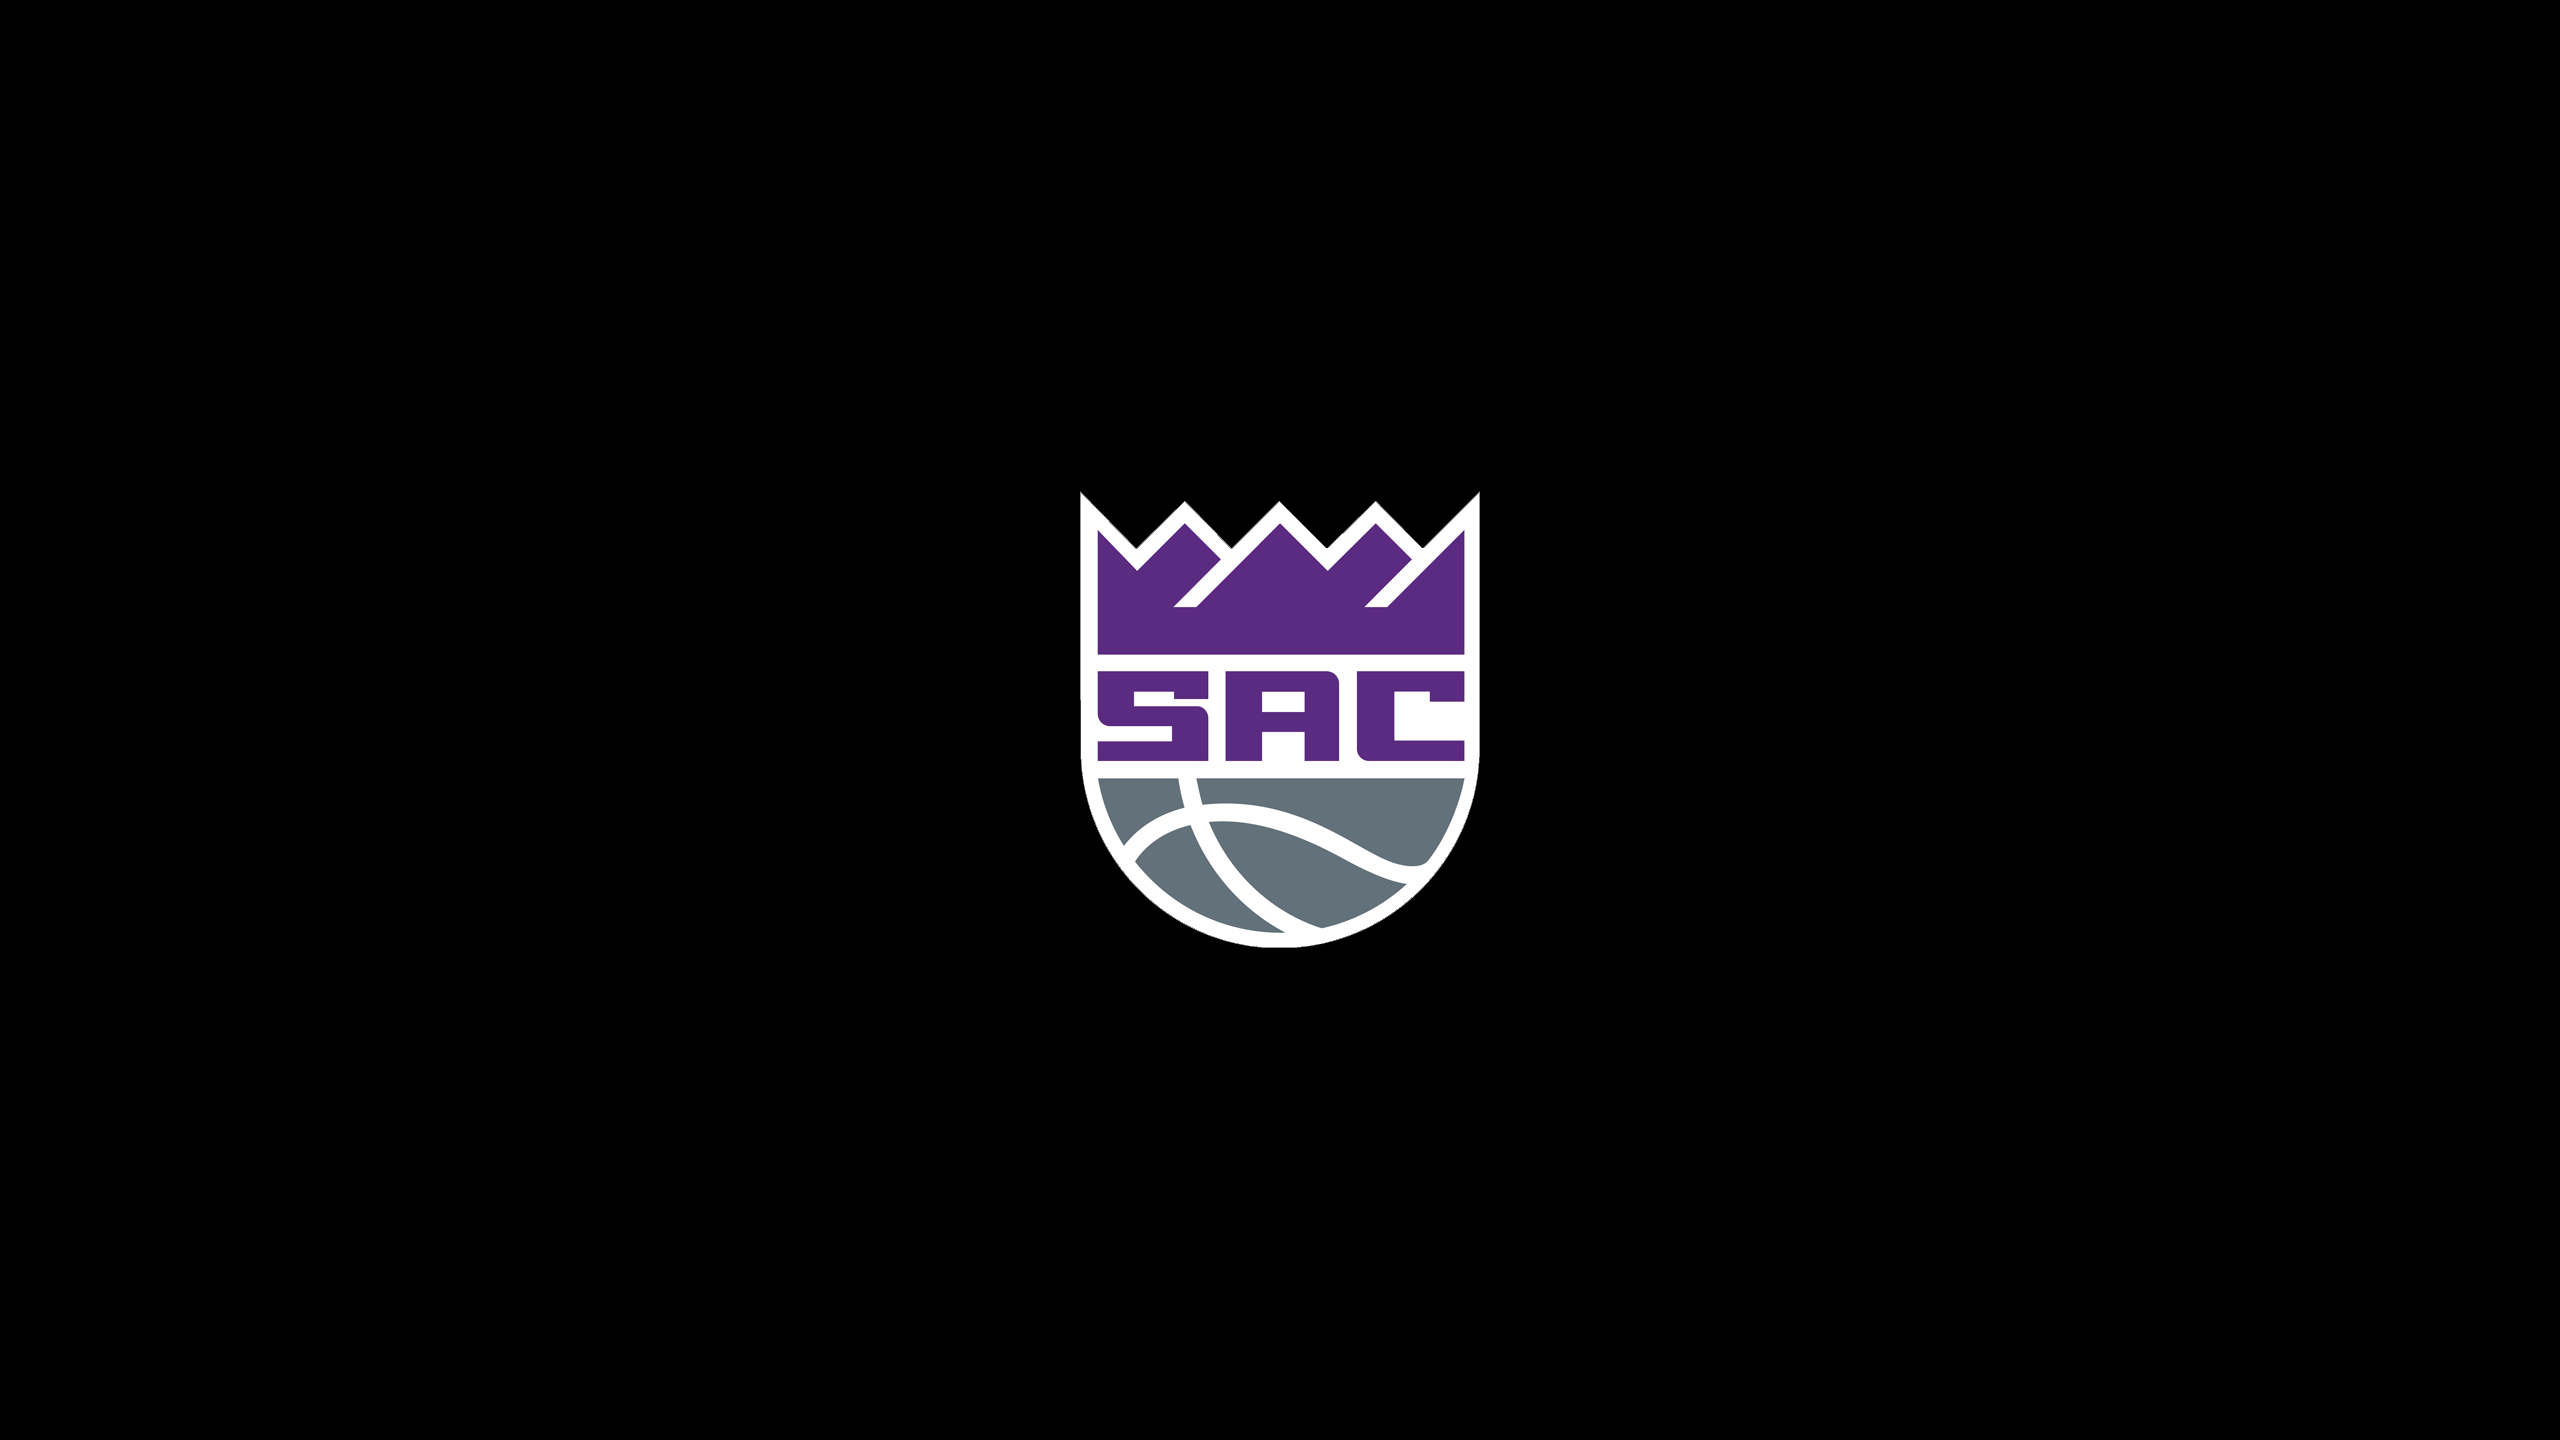 Sacramento Kings (Alternate). Stephen Clark (sgclark.com)